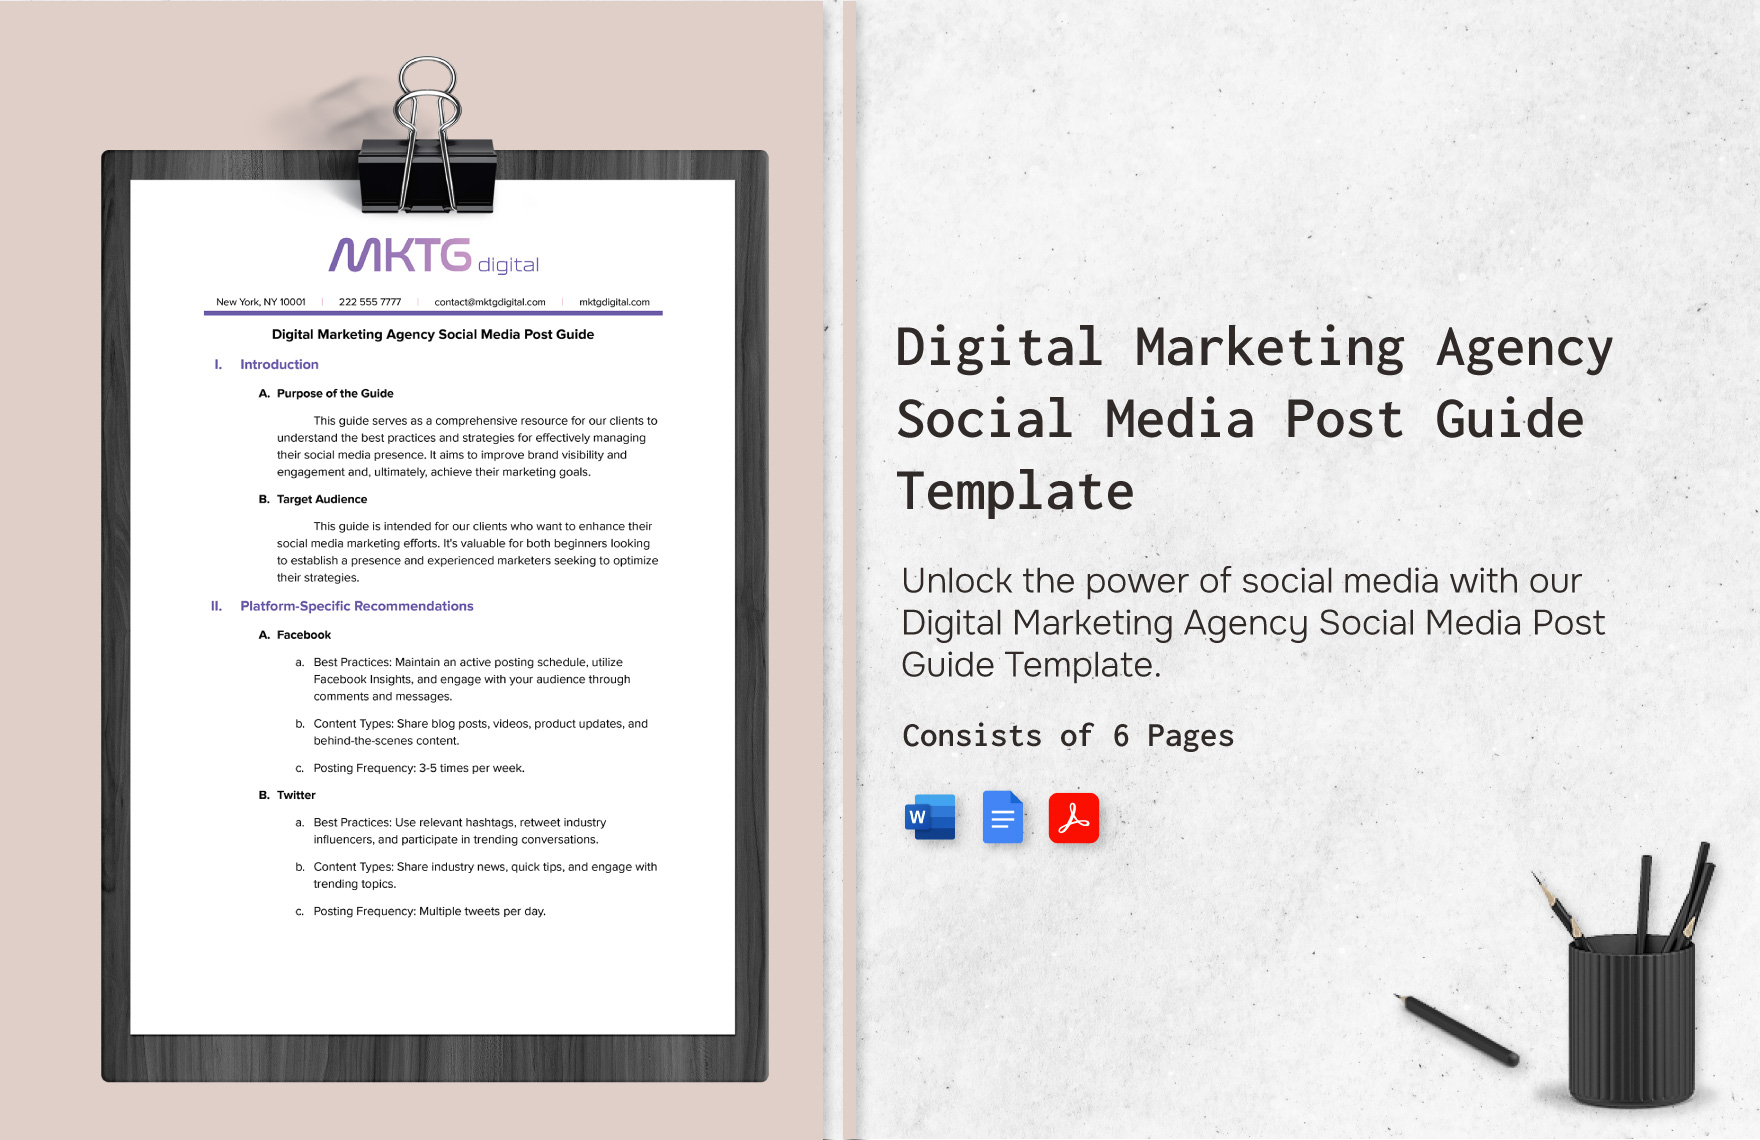 Digital Marketing Agency Social Media Post Guide Template